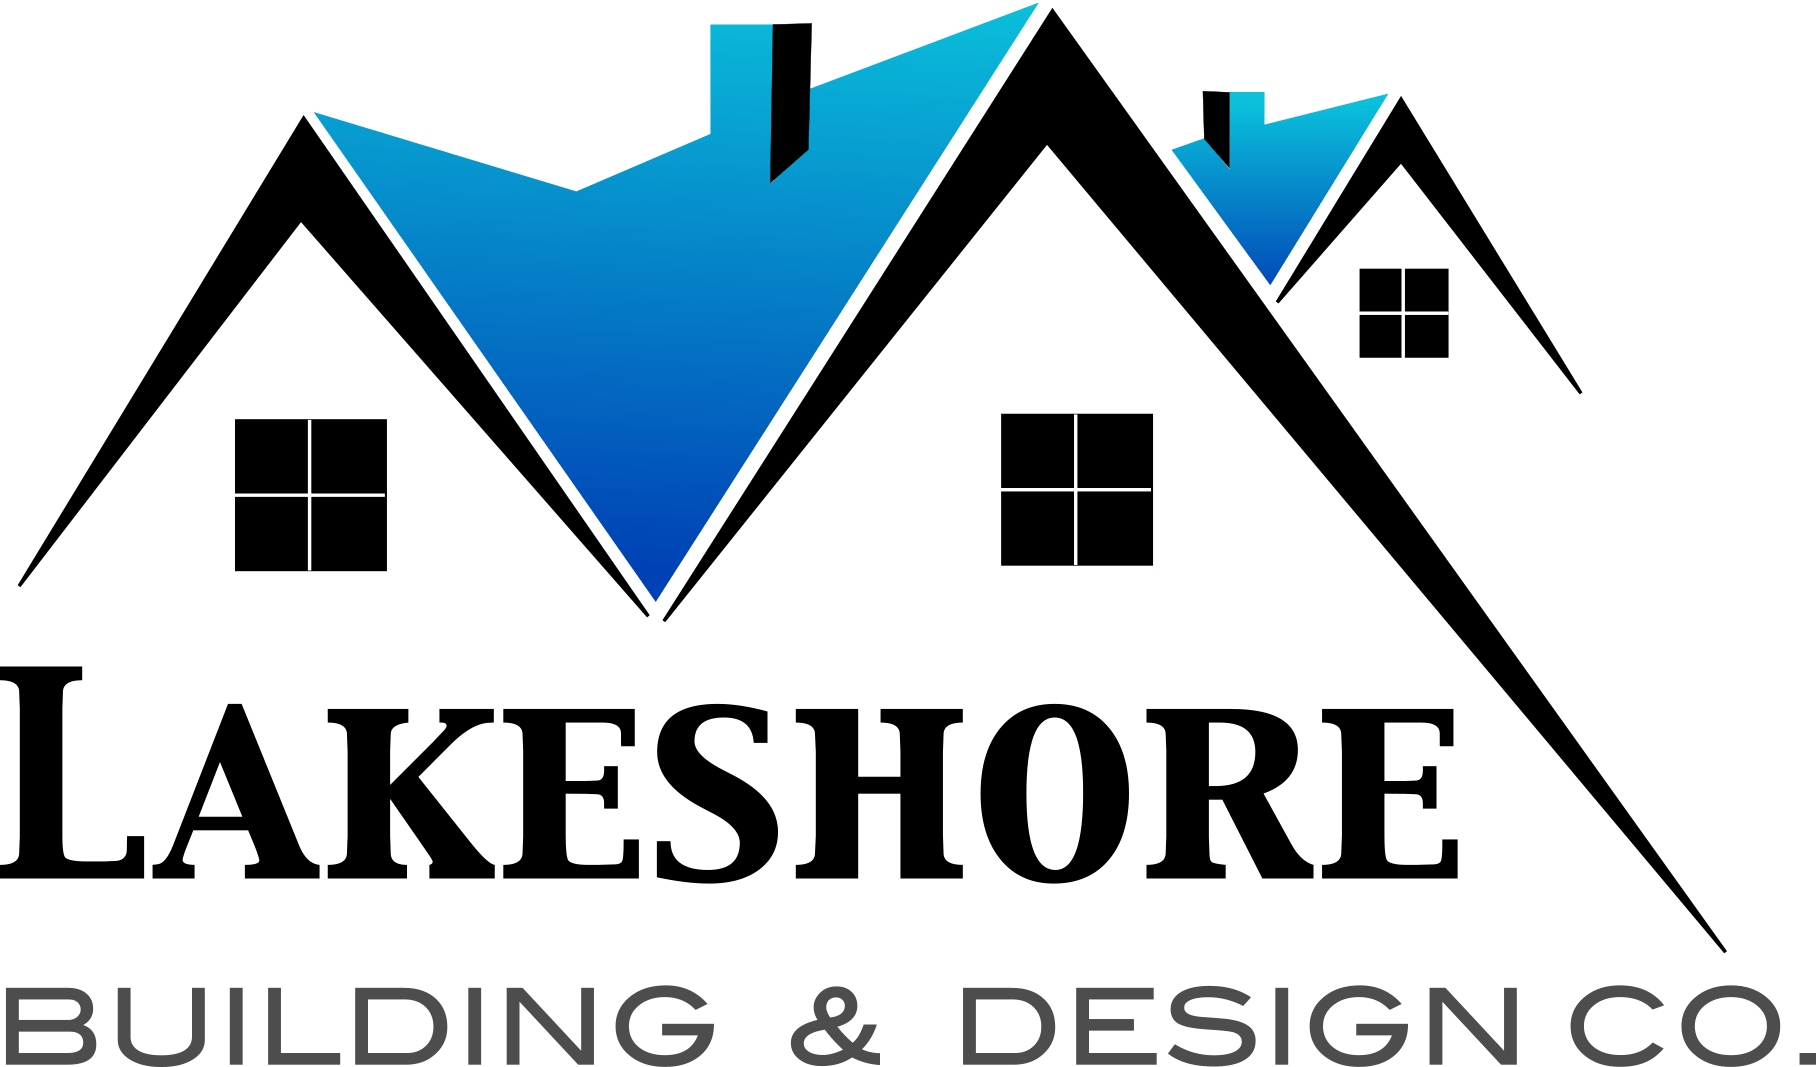 Lakeshore Building & Design Co.